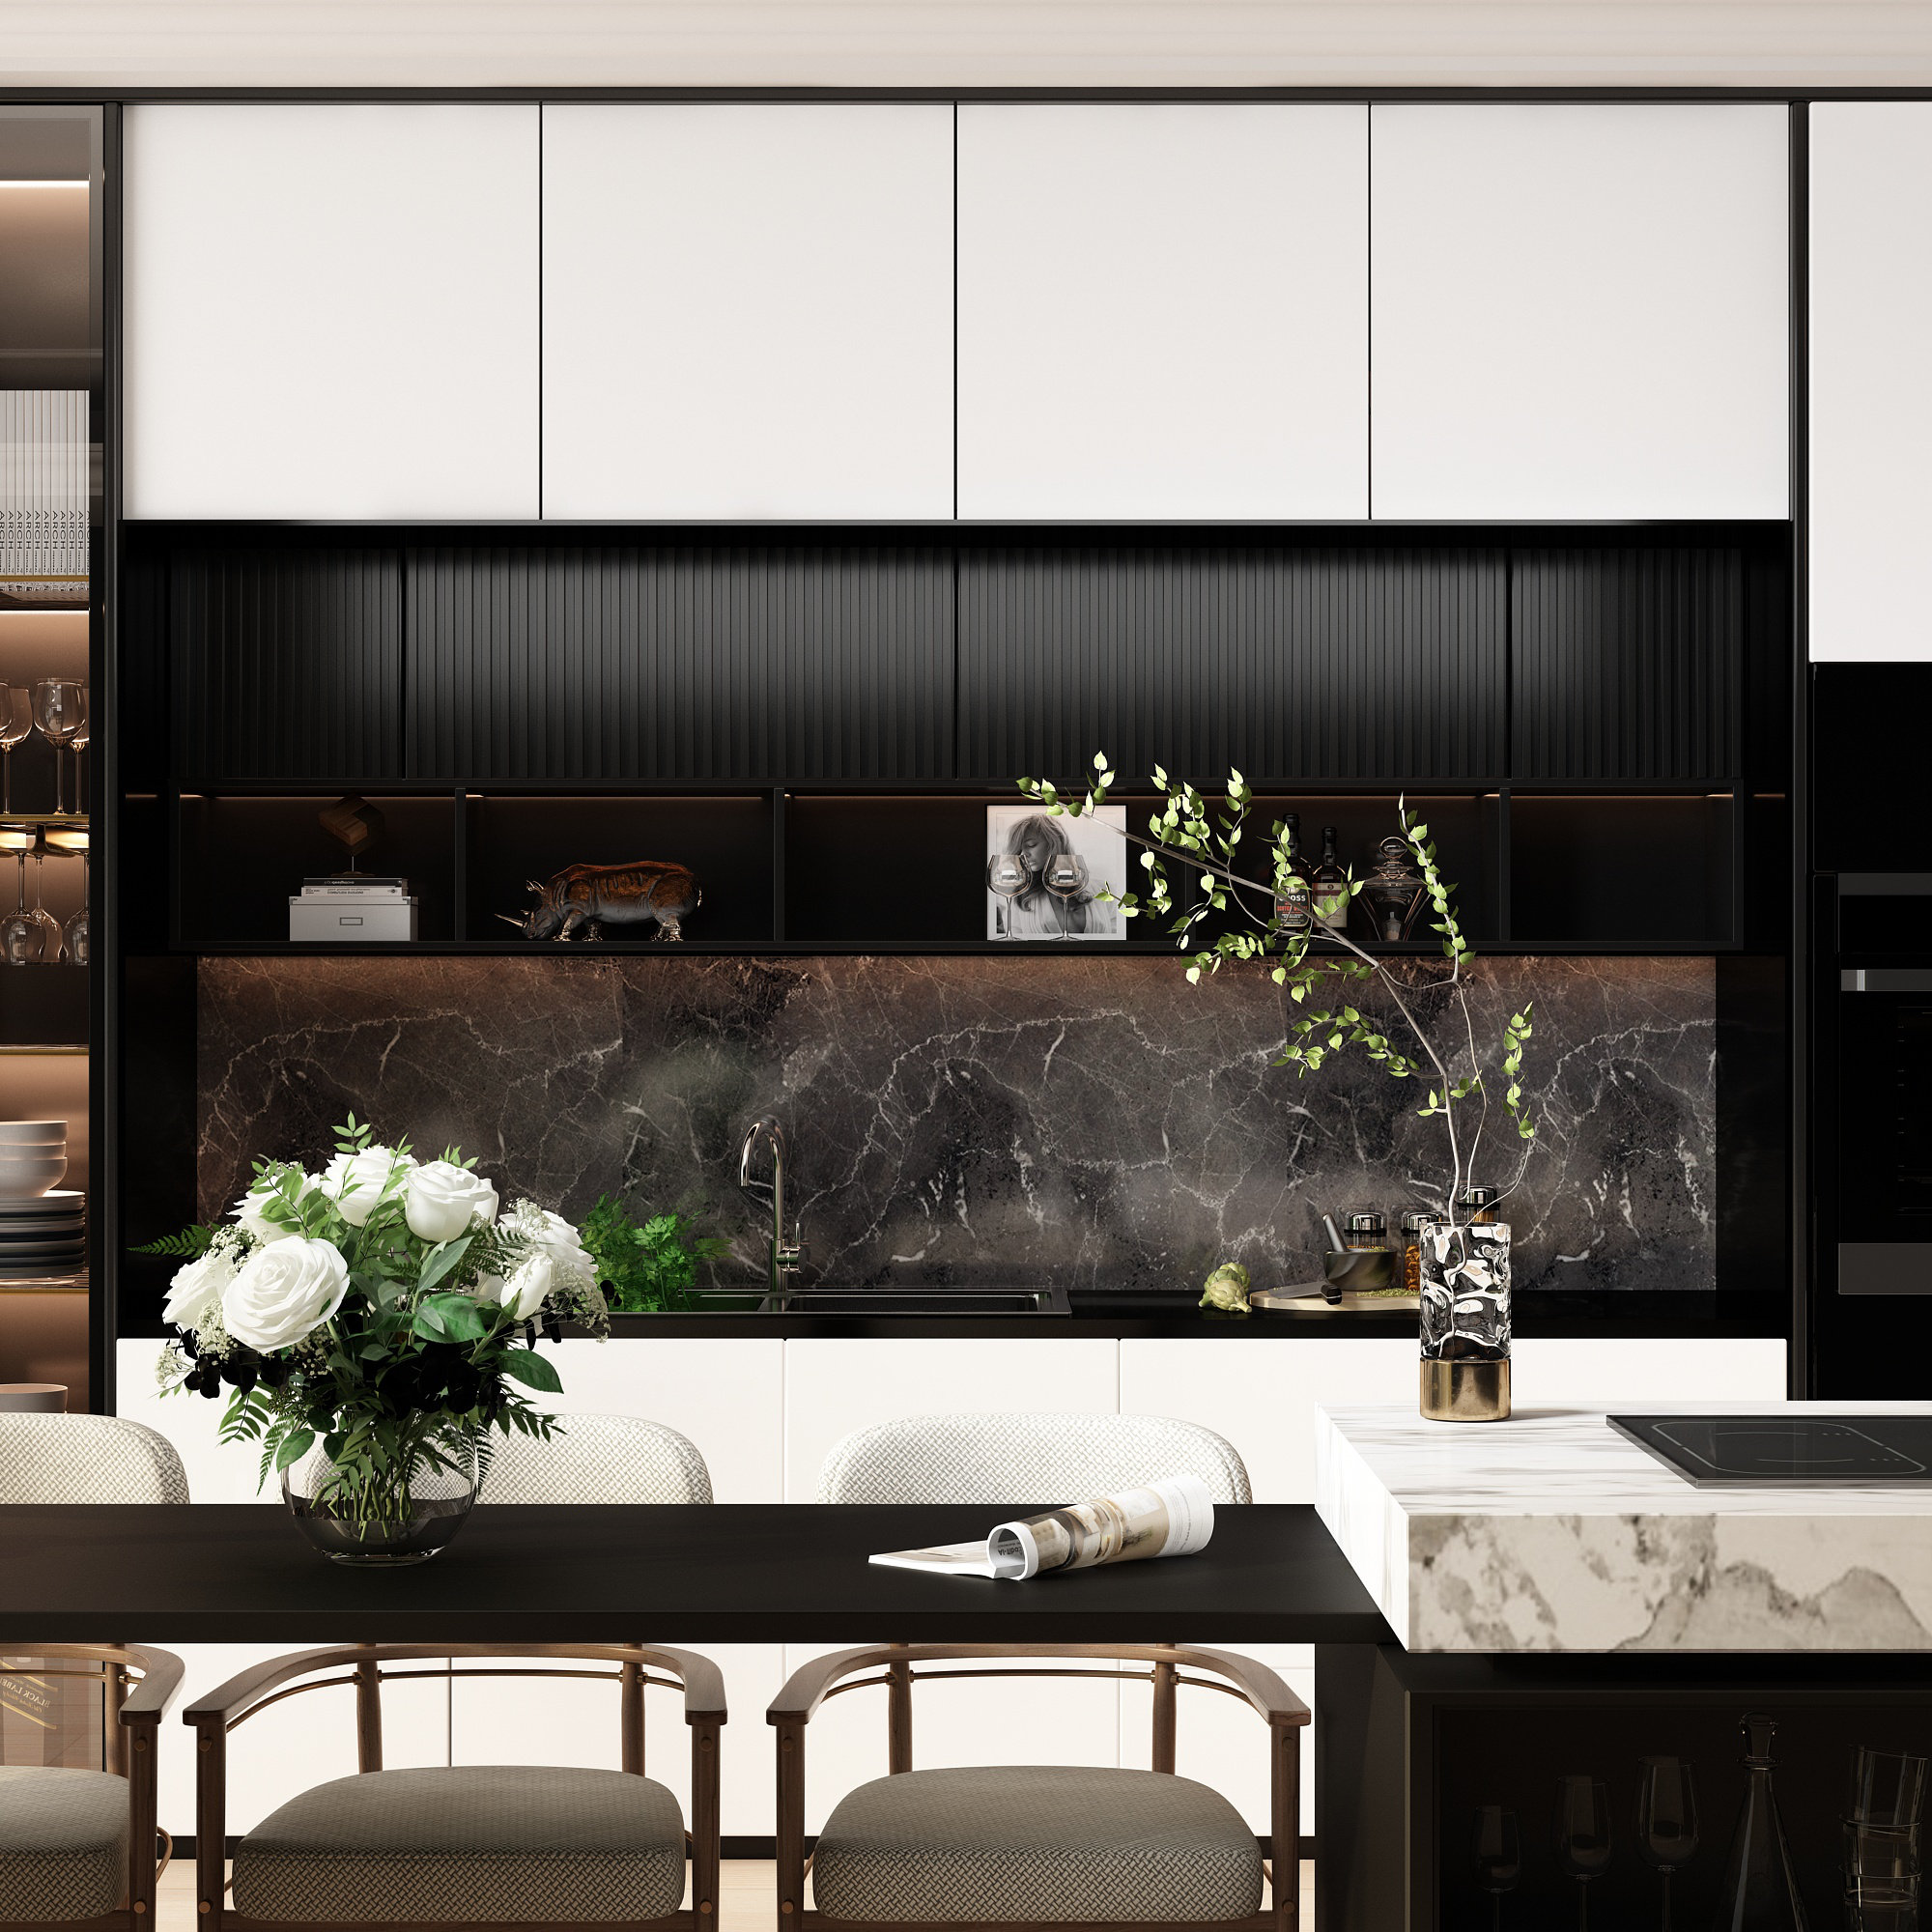 Slab 63'' W x 55.1'' H White Medium Density Fiberboard (MDF) Kitchen  Cabinet Set Ready-to-Assemble